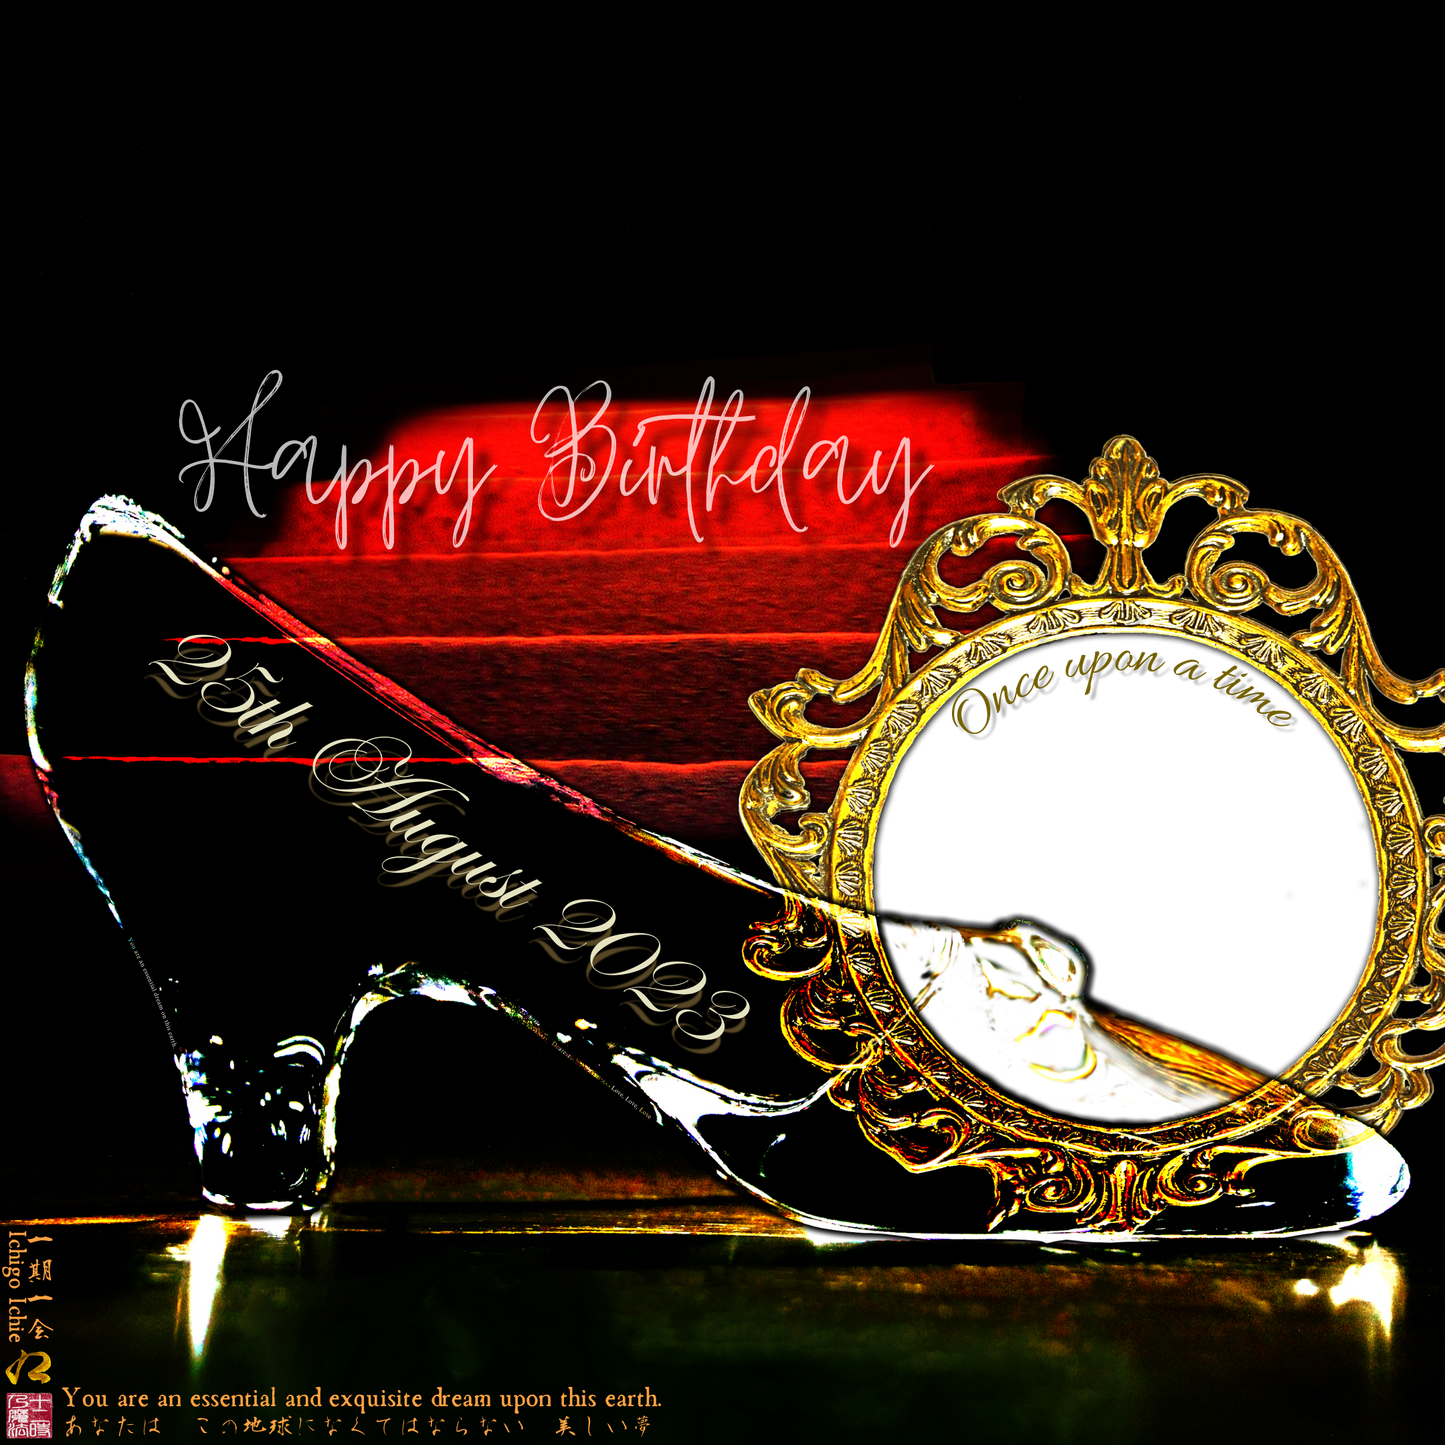 Happy Birthday Glass Slipper "Ichigo Ichie" 25th August 2023 the Right (1-of-1) NFT Art